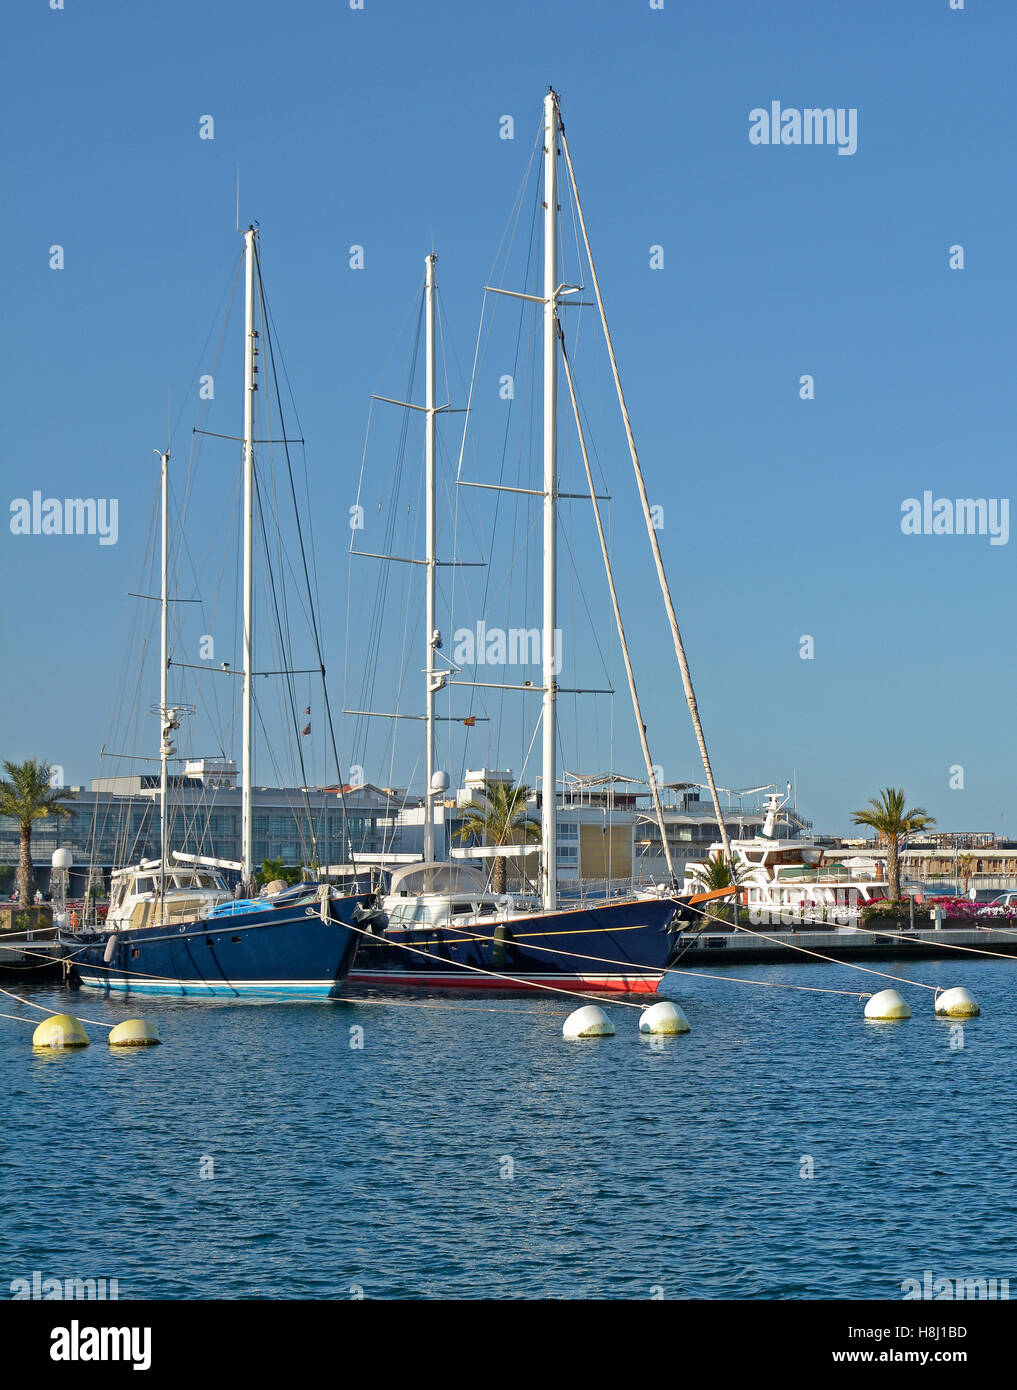 Moored yachts in the marina at Valencia, Spain Stock Photo - Alamy